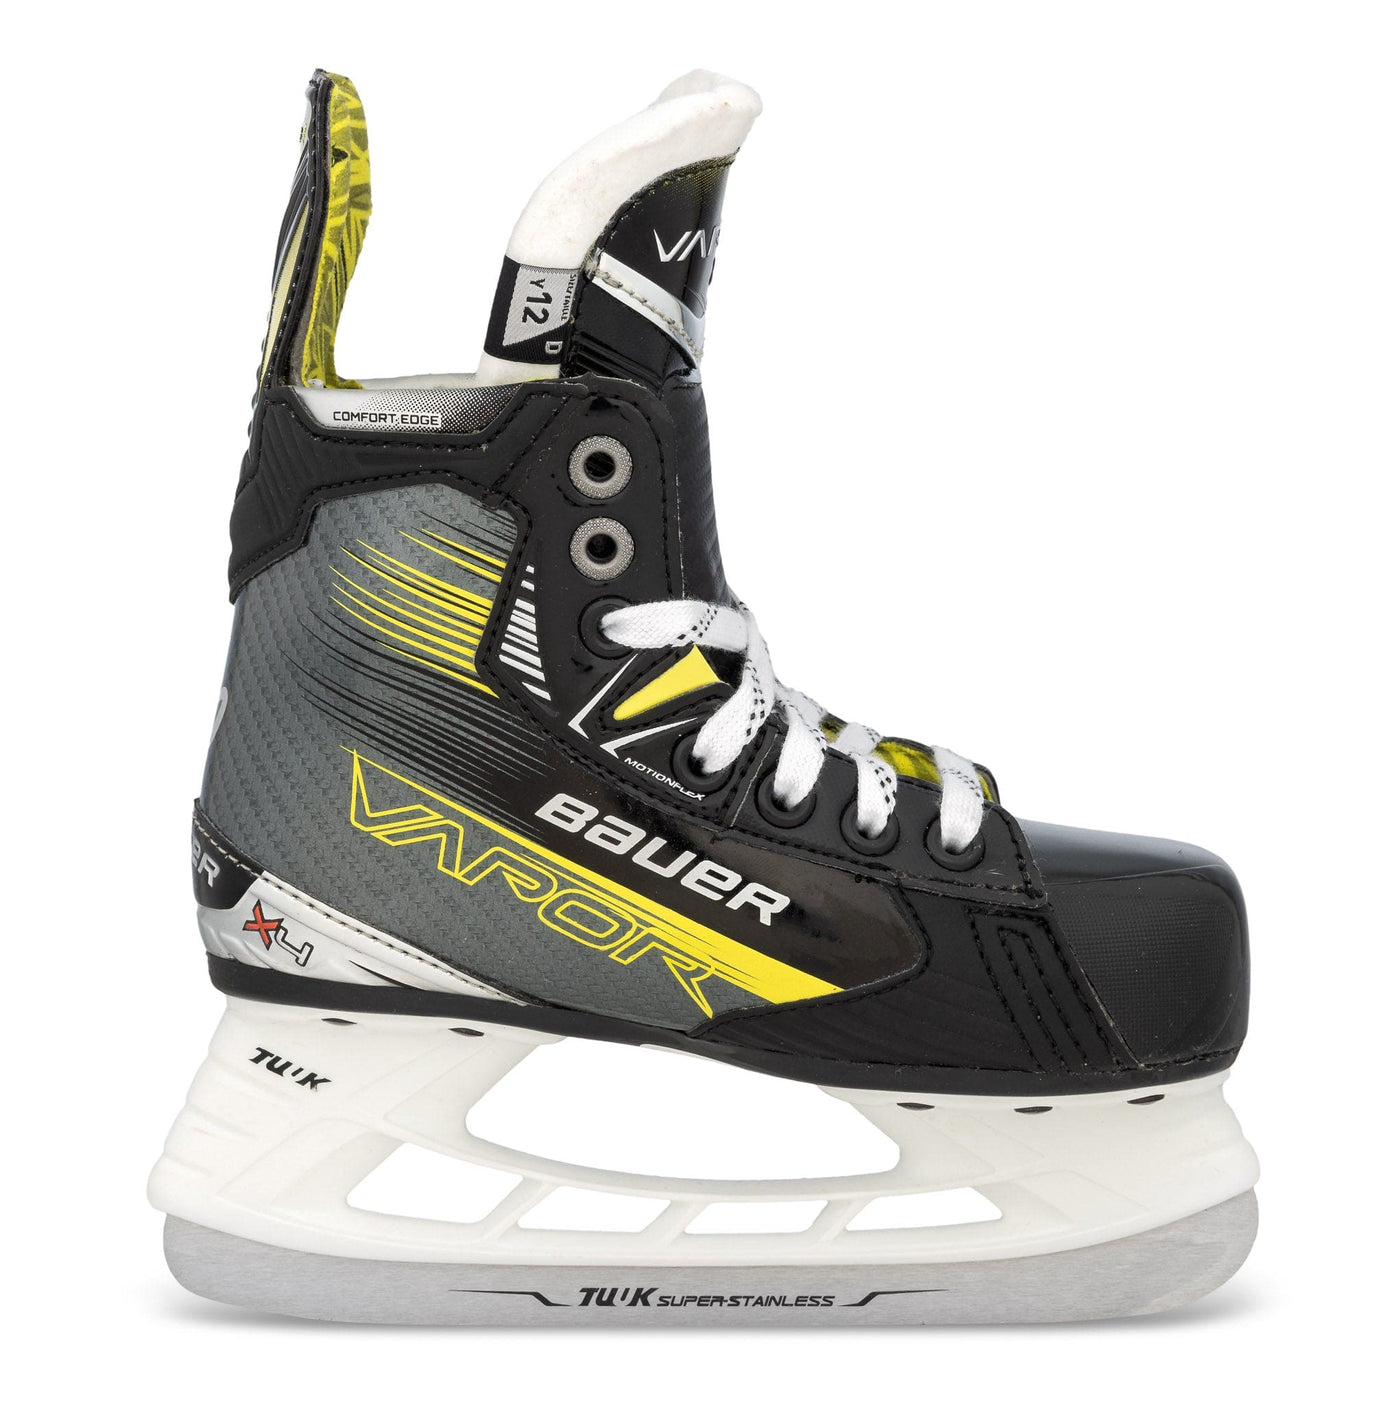 Bauer Vapor X4 Youth Hockey Skates - The Hockey Shop Source For Sports